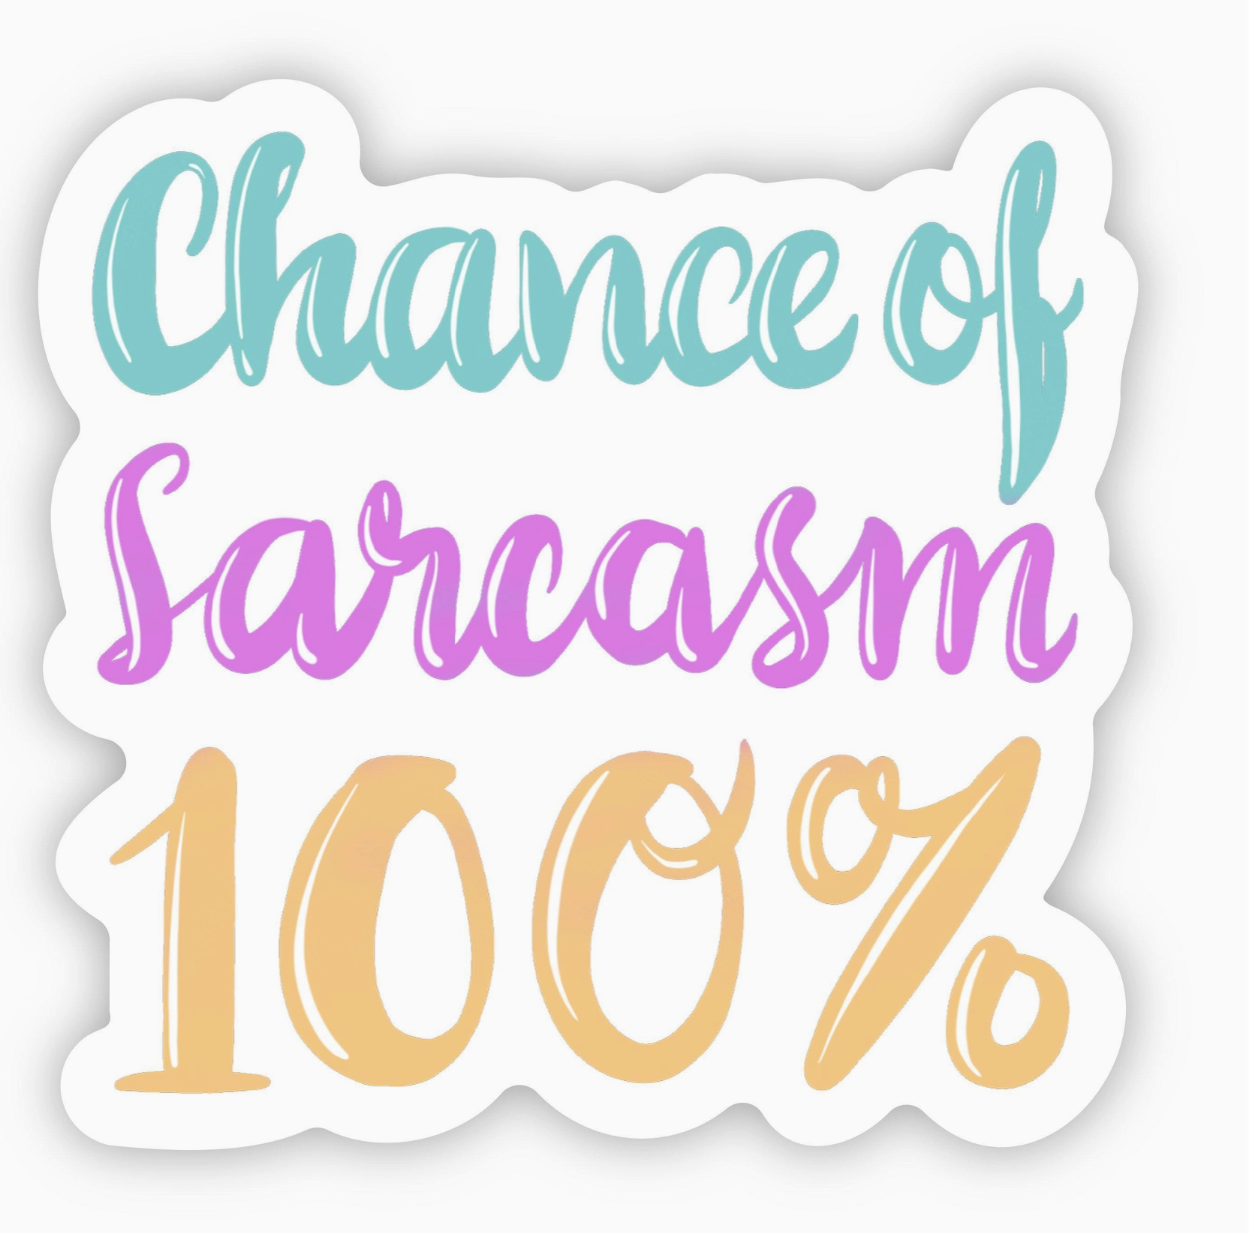 Chance of Sarcasm 100% Multicolor Sticker